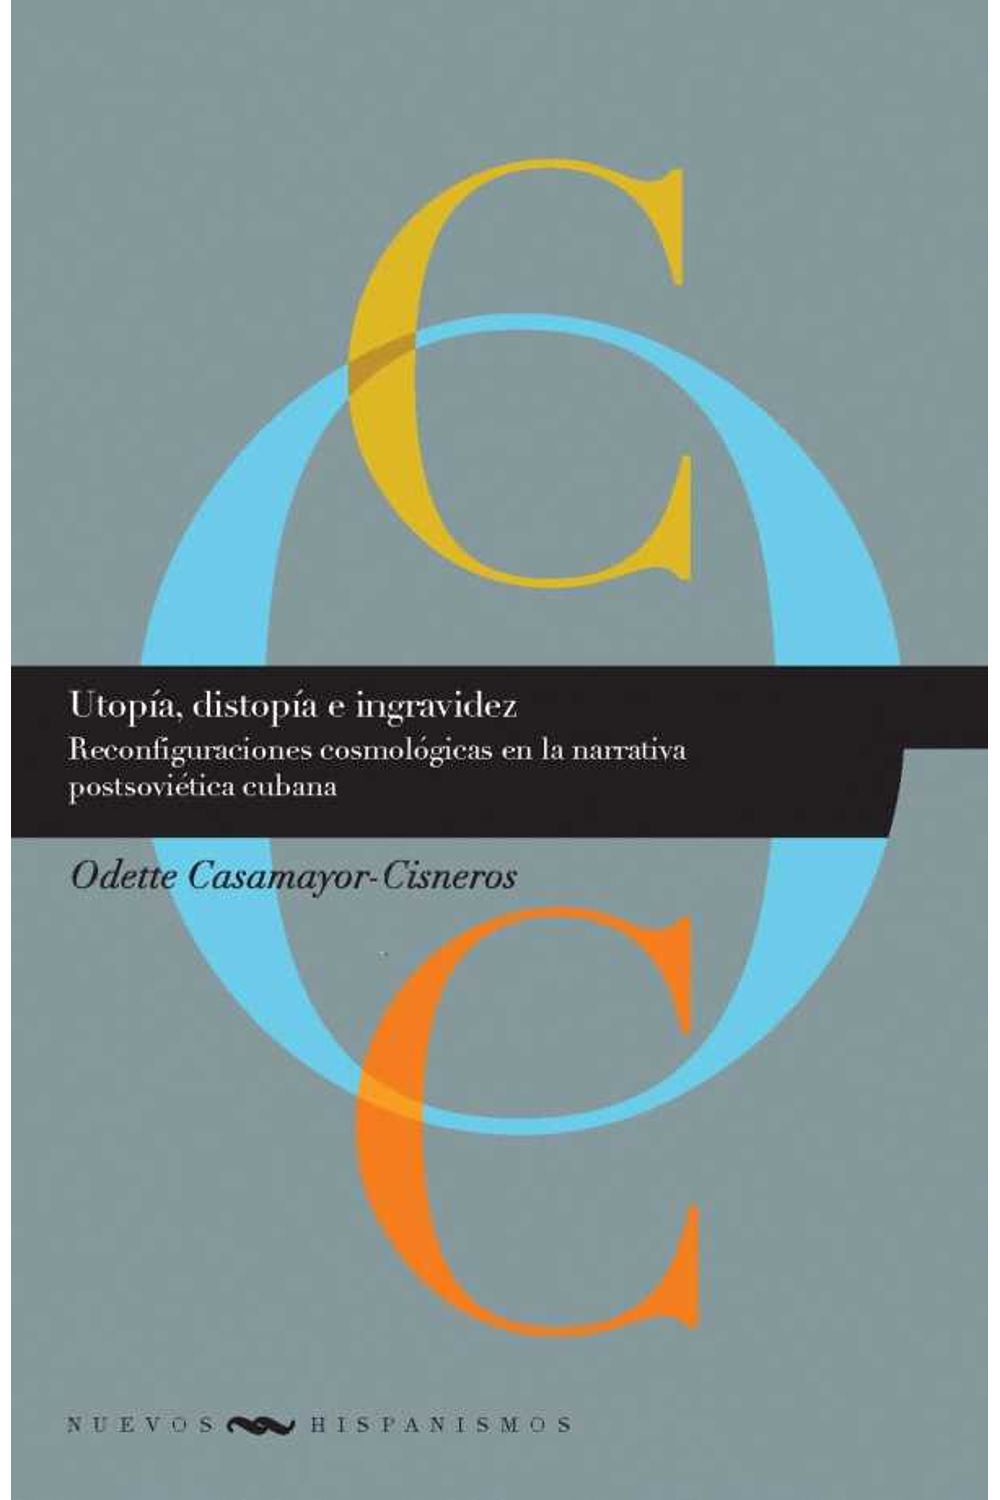 bw-utopiacutea-distopiacutea-e-ingravidez-reconfiguraciones-cosmoloacutegicas-en-la-narrativa-postsovieacutetica-cubana-iberoamericana-editorial-vervuert-9783954870622